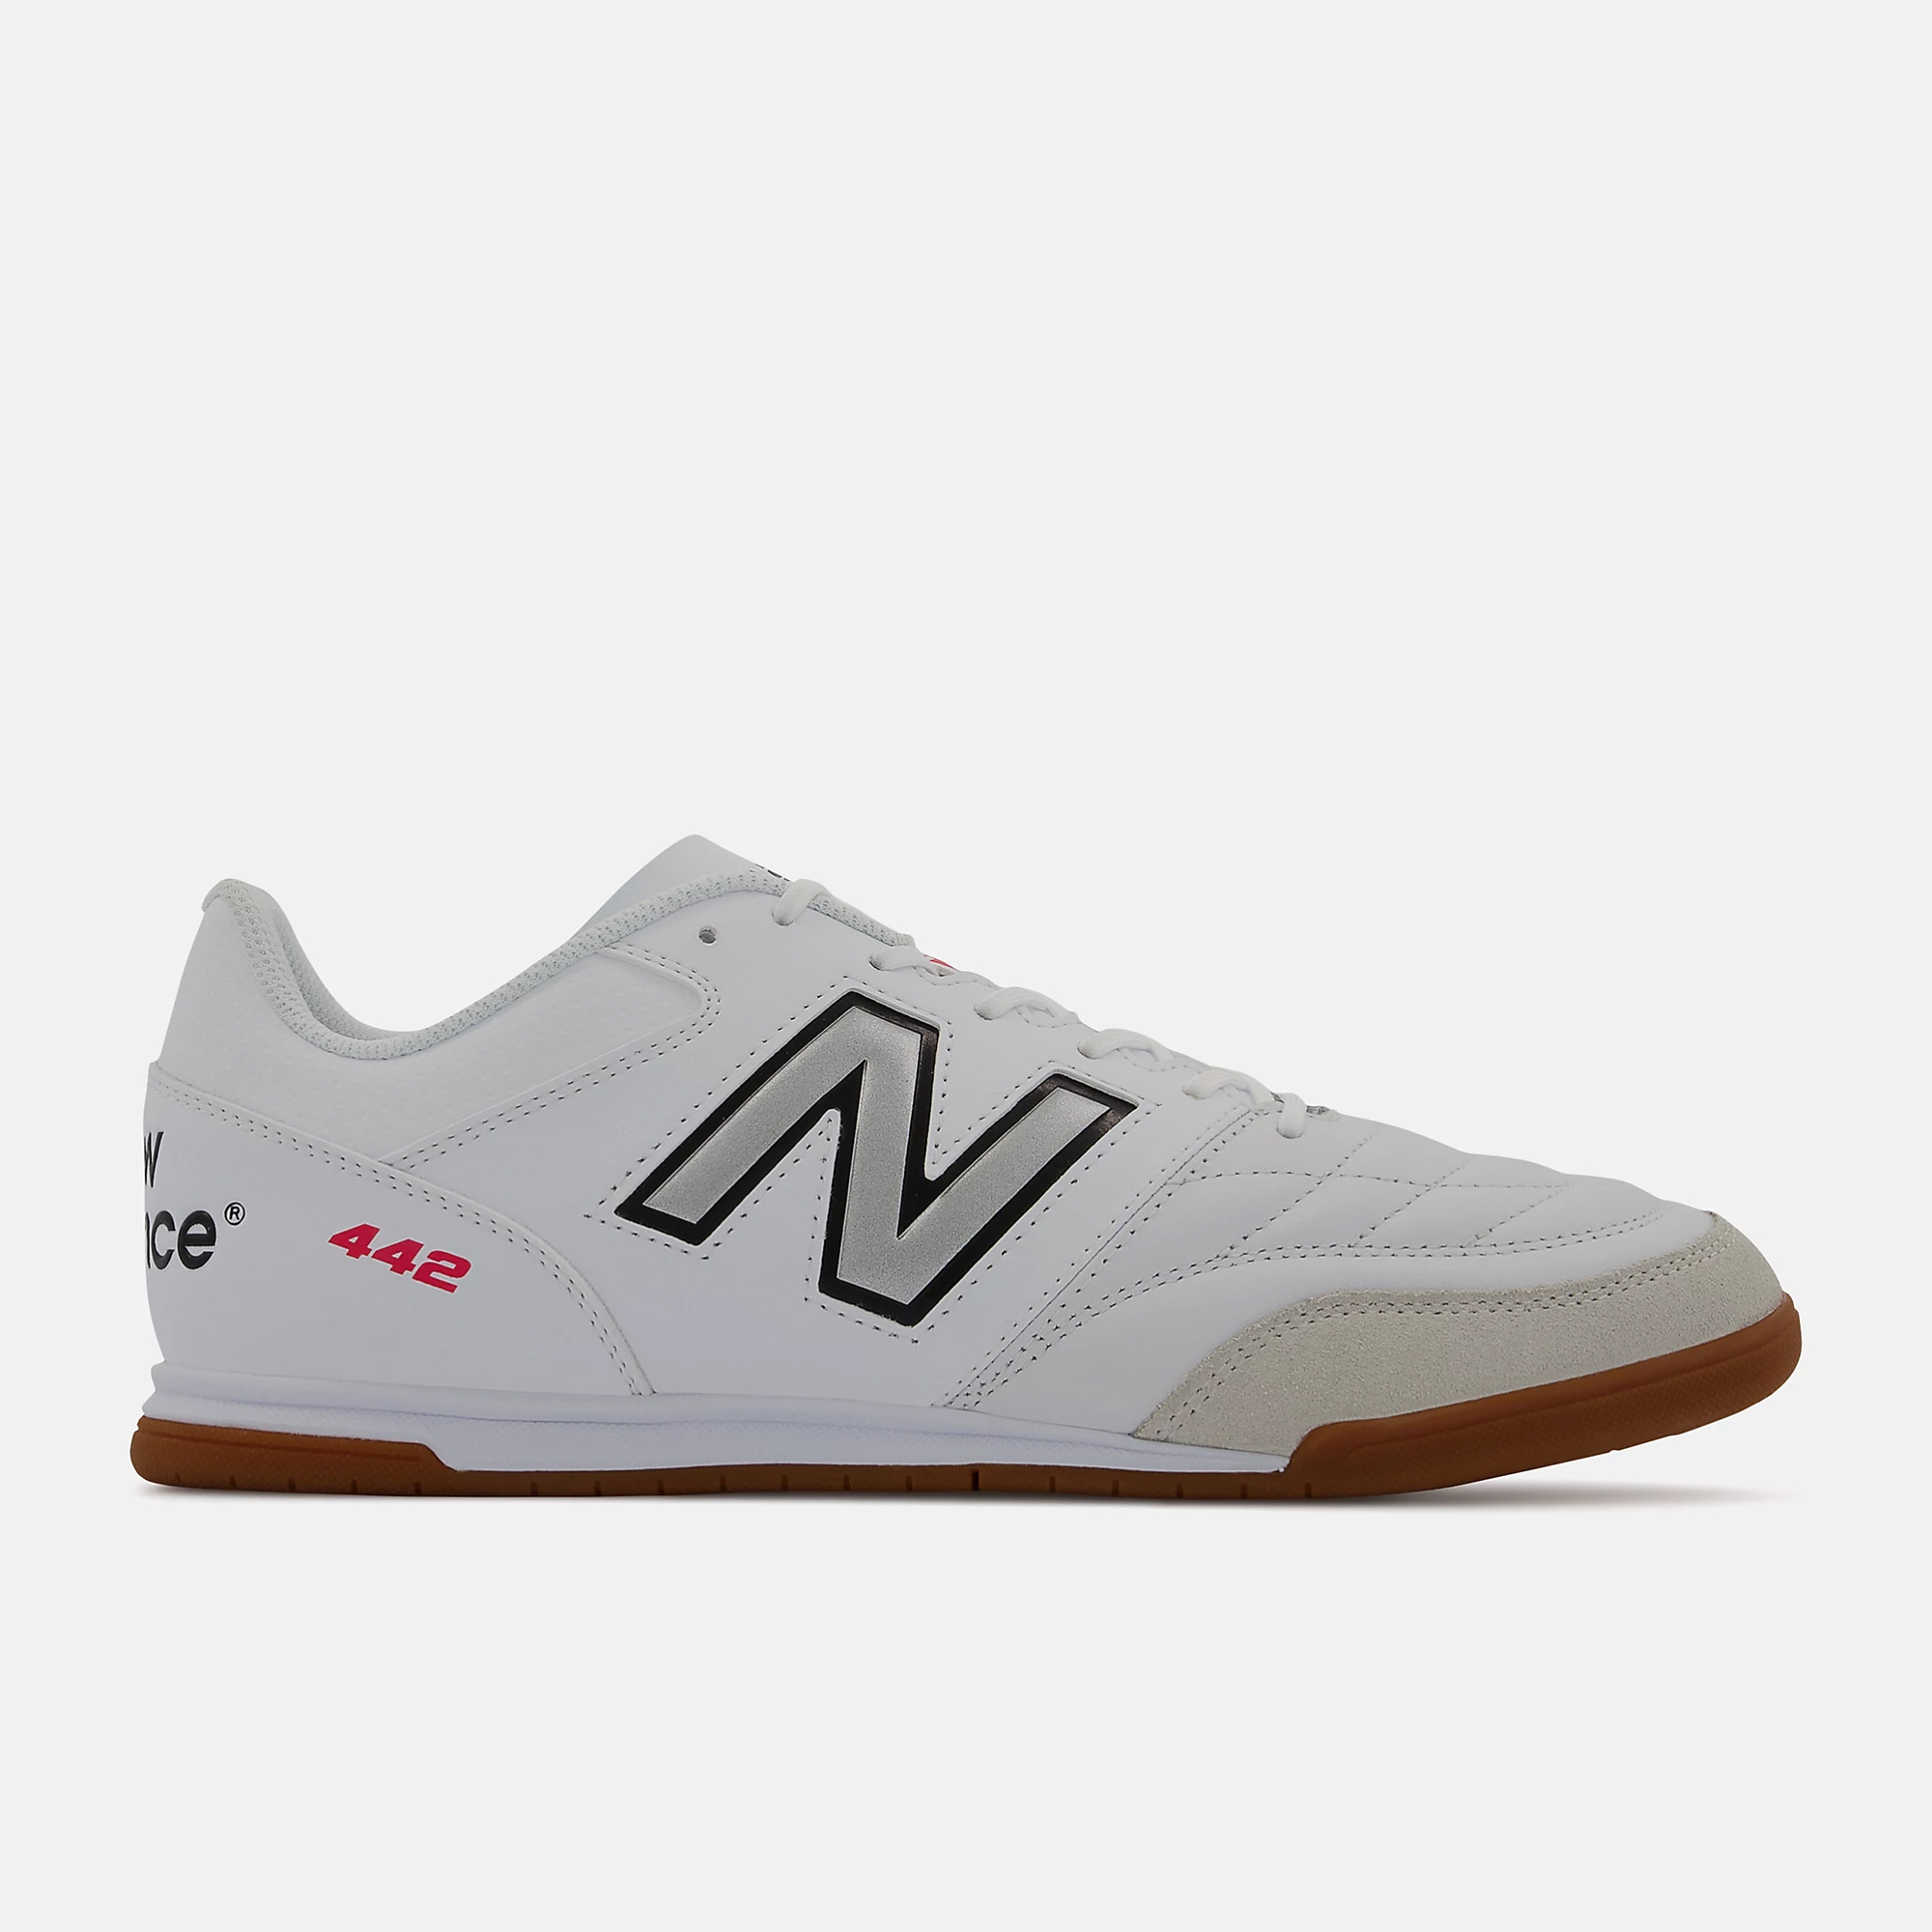 New Balance 442 V2 Team Indoor Soccer Shoes (2E Wide) -  White